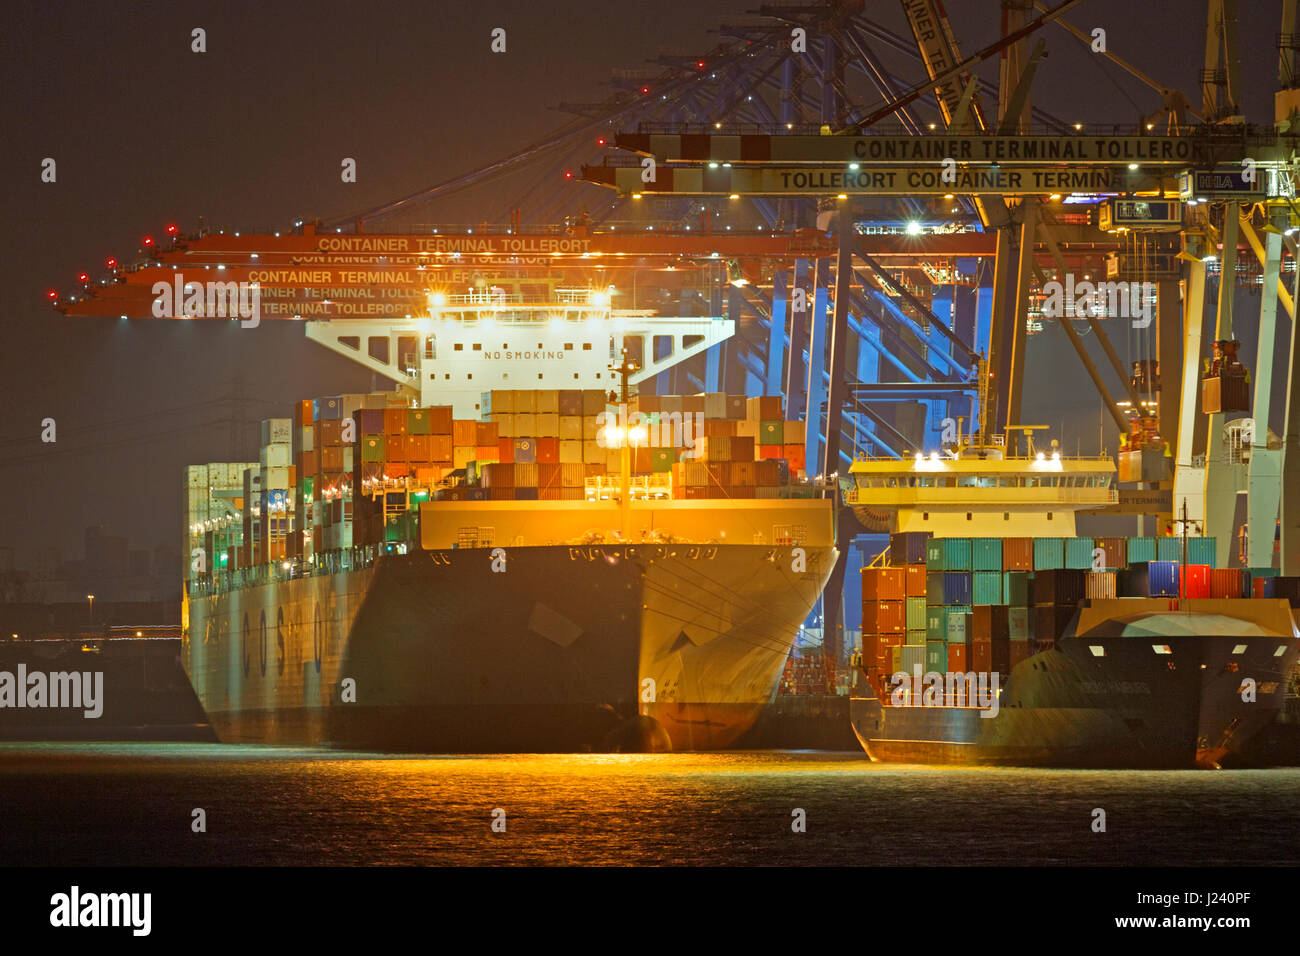 Container ship at night at Hamburg harbor, Containerterminal Tollerort, Hamburg, Germany, Europe Stock Photo